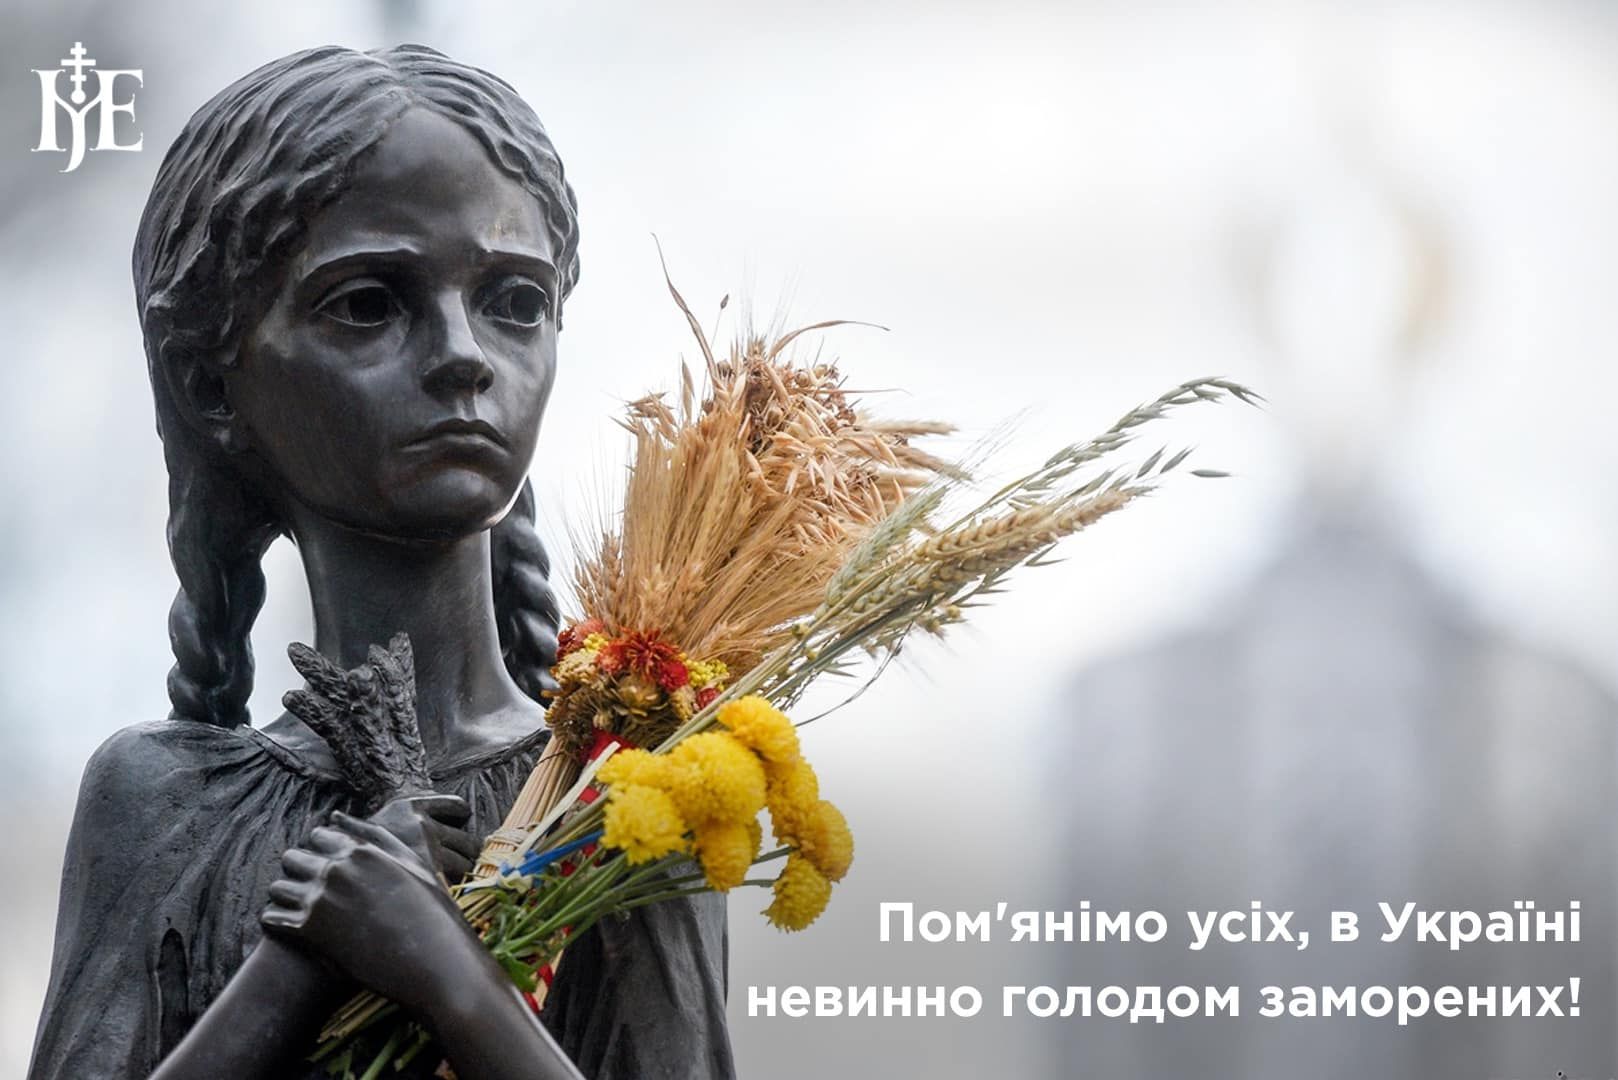 Щодесятиліття радянська влада приносила штучний голод на українську землю.